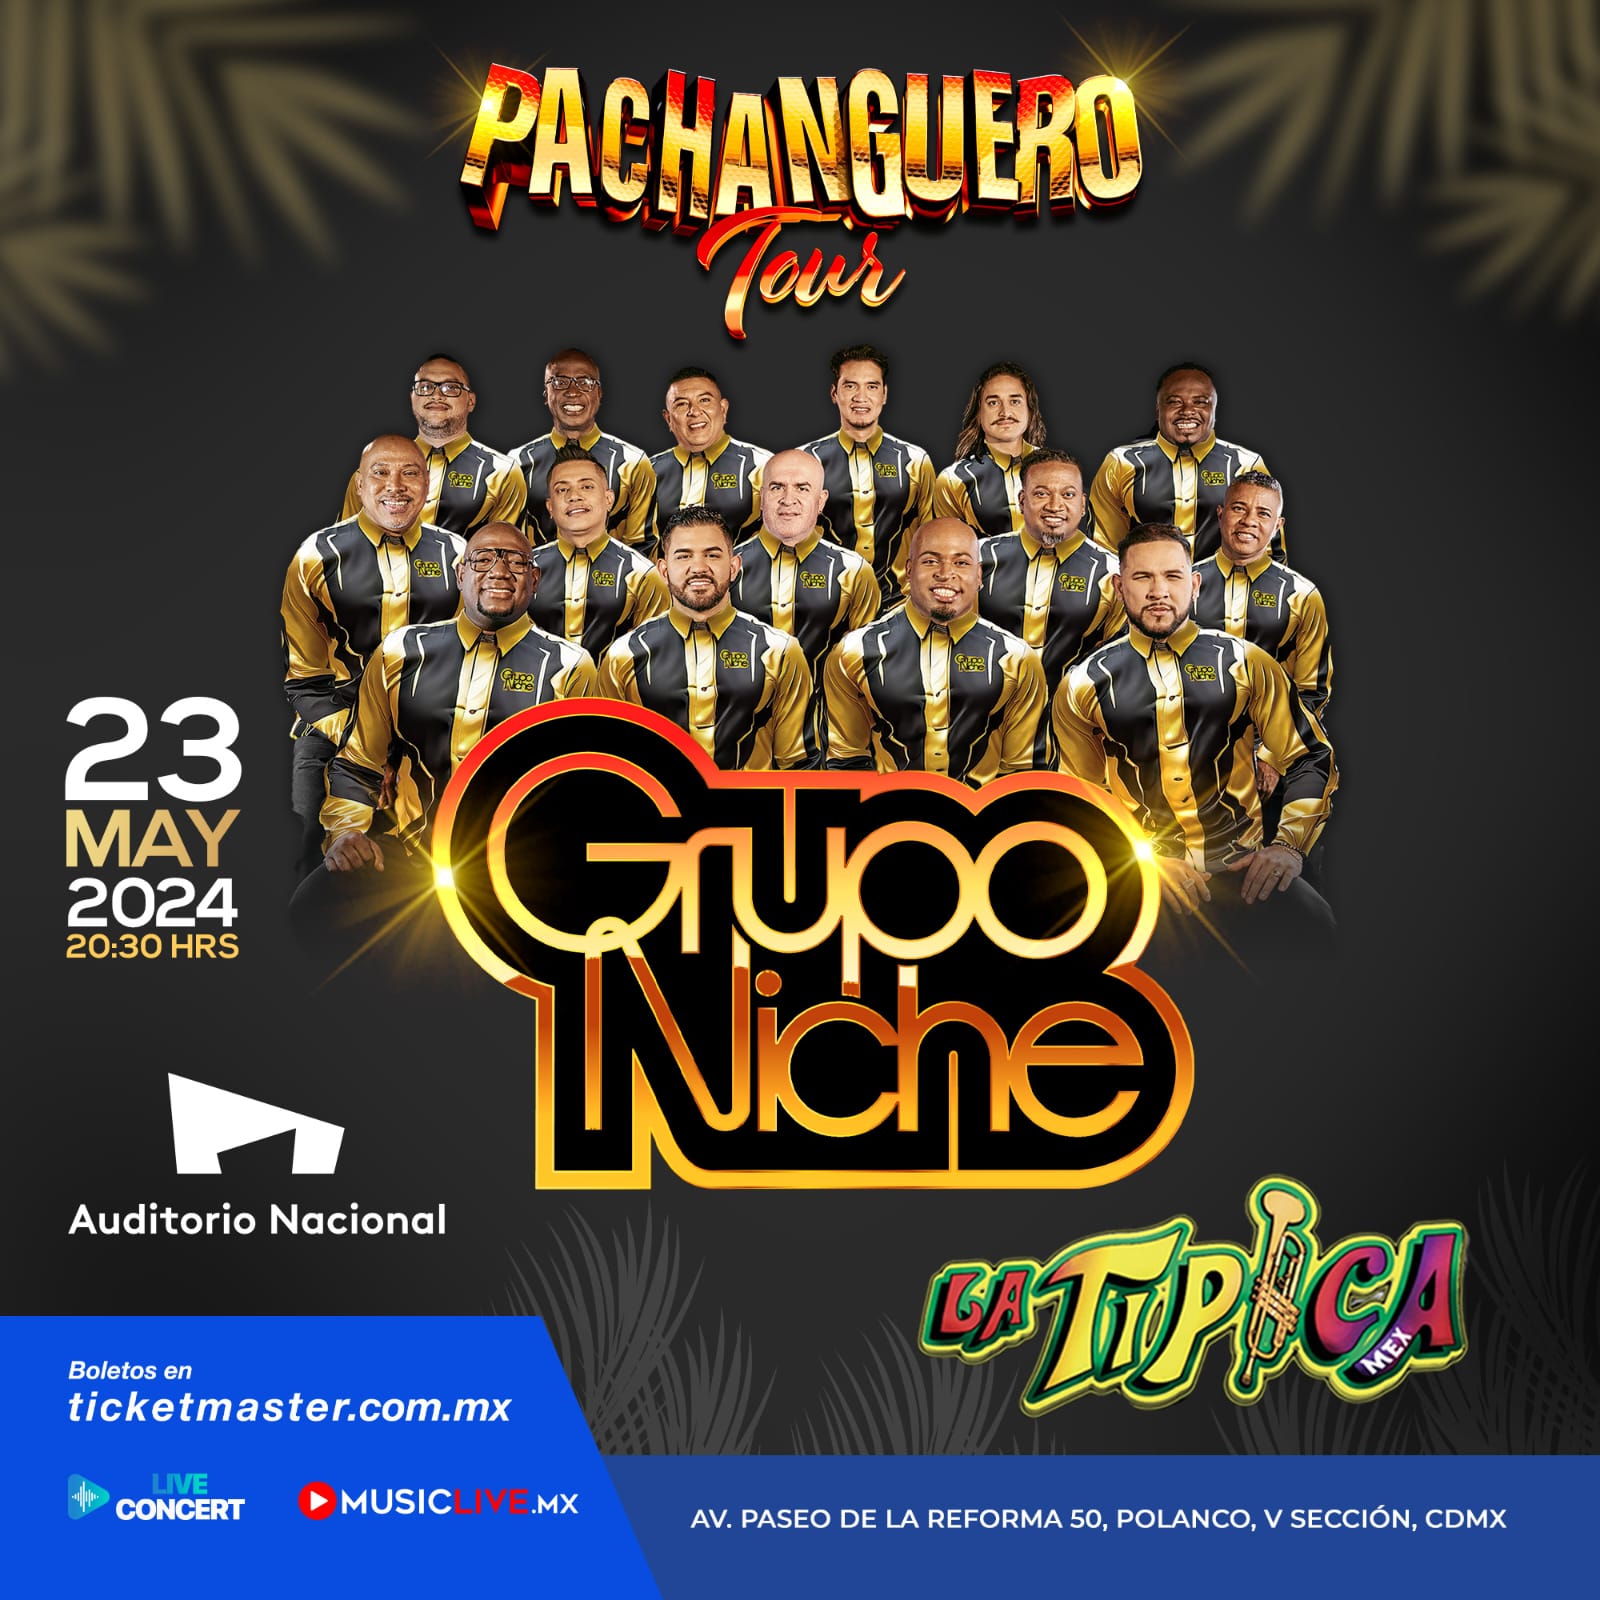 Grupo Niche llega al Auditorio Nacional con su «Pachanguero Tour» celebrando su 40 aniversario